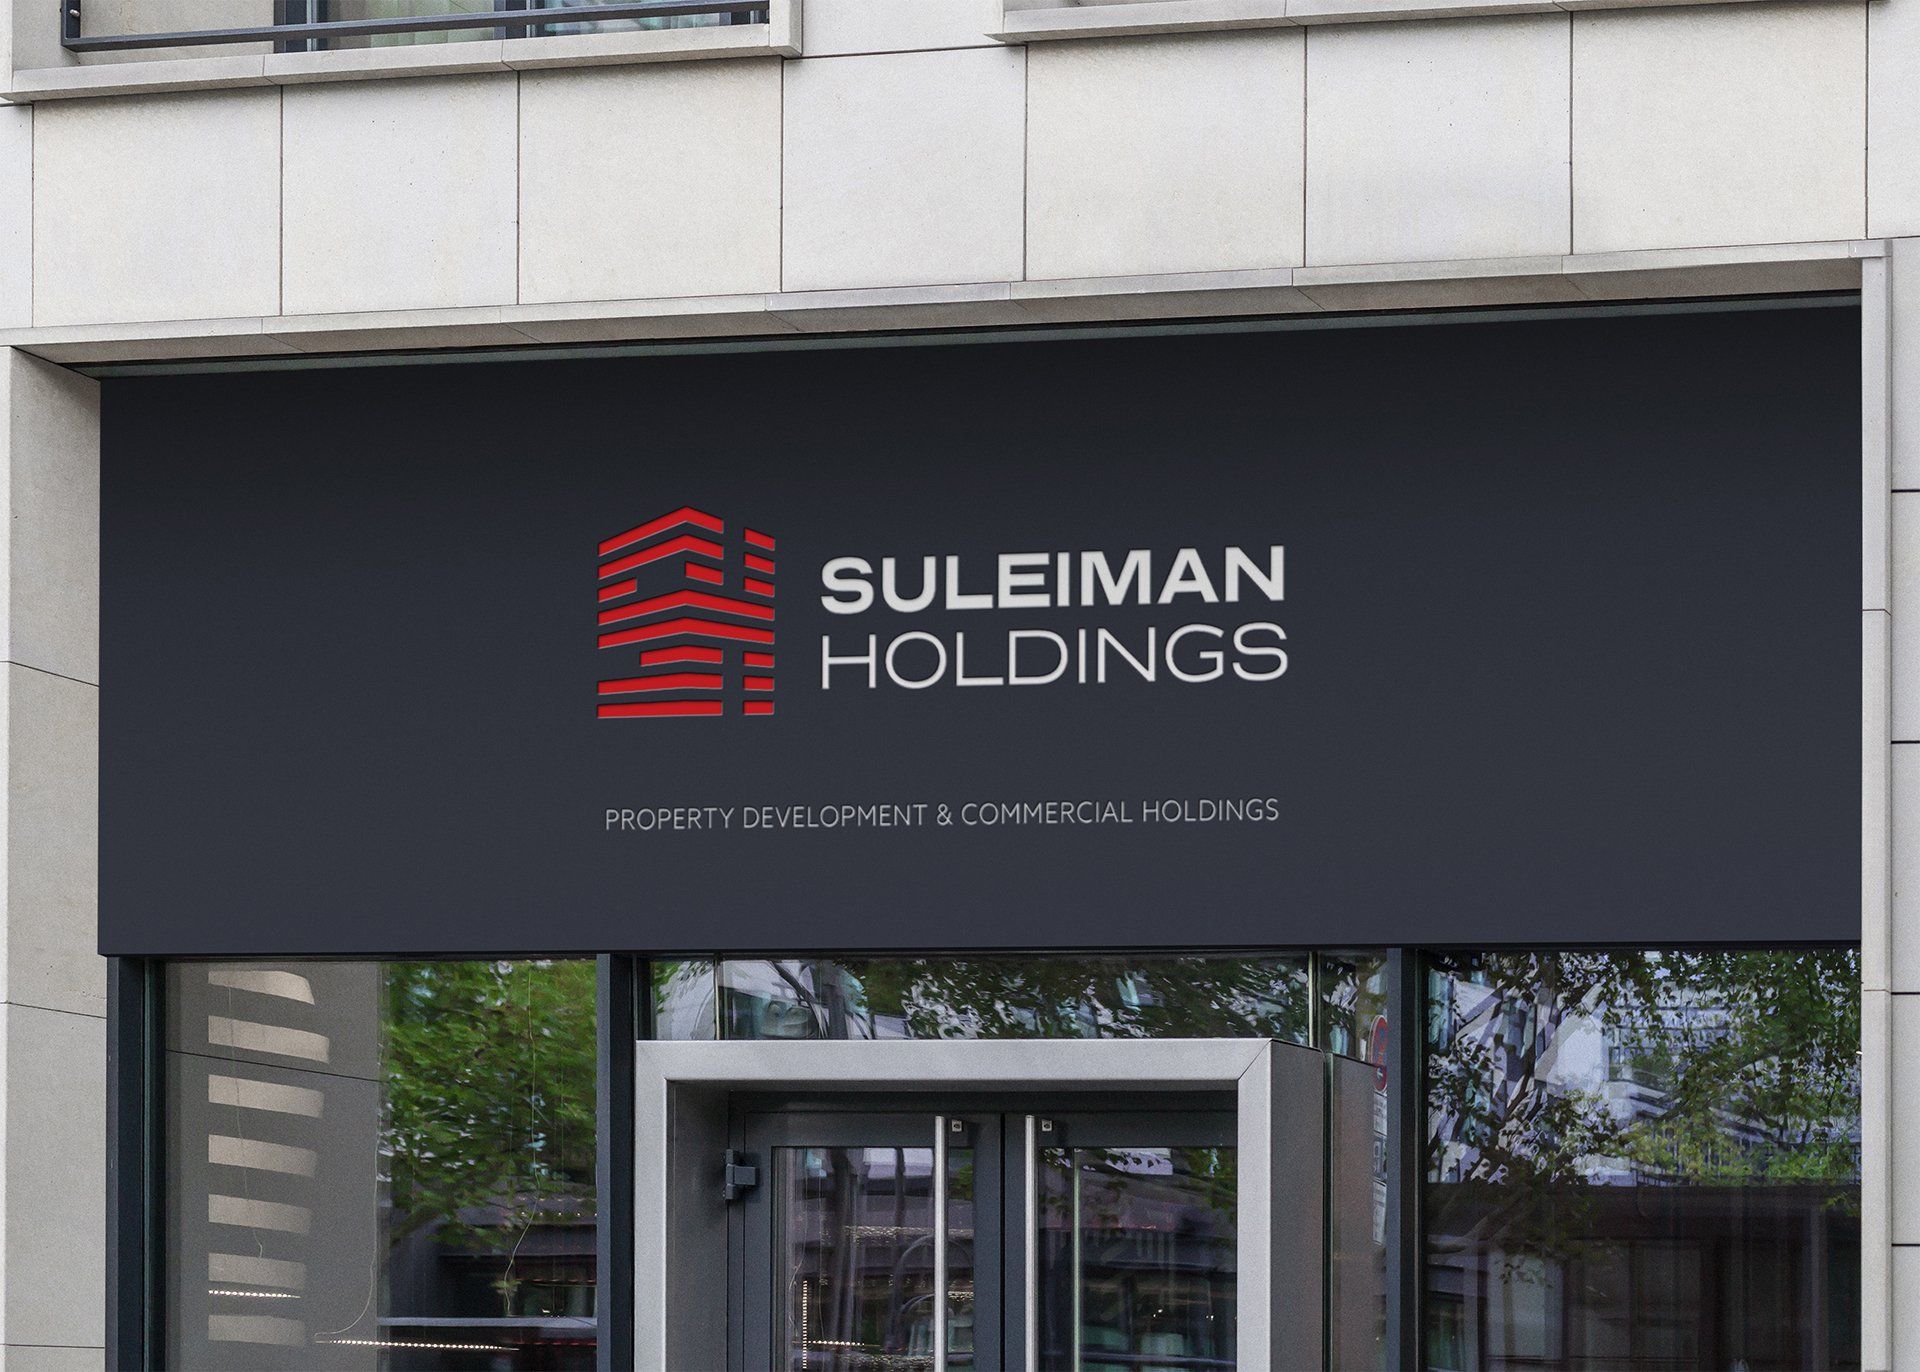 Suleiman Holdings branding by Vanilla Hayes Ltd in Blenheim, New Zealand